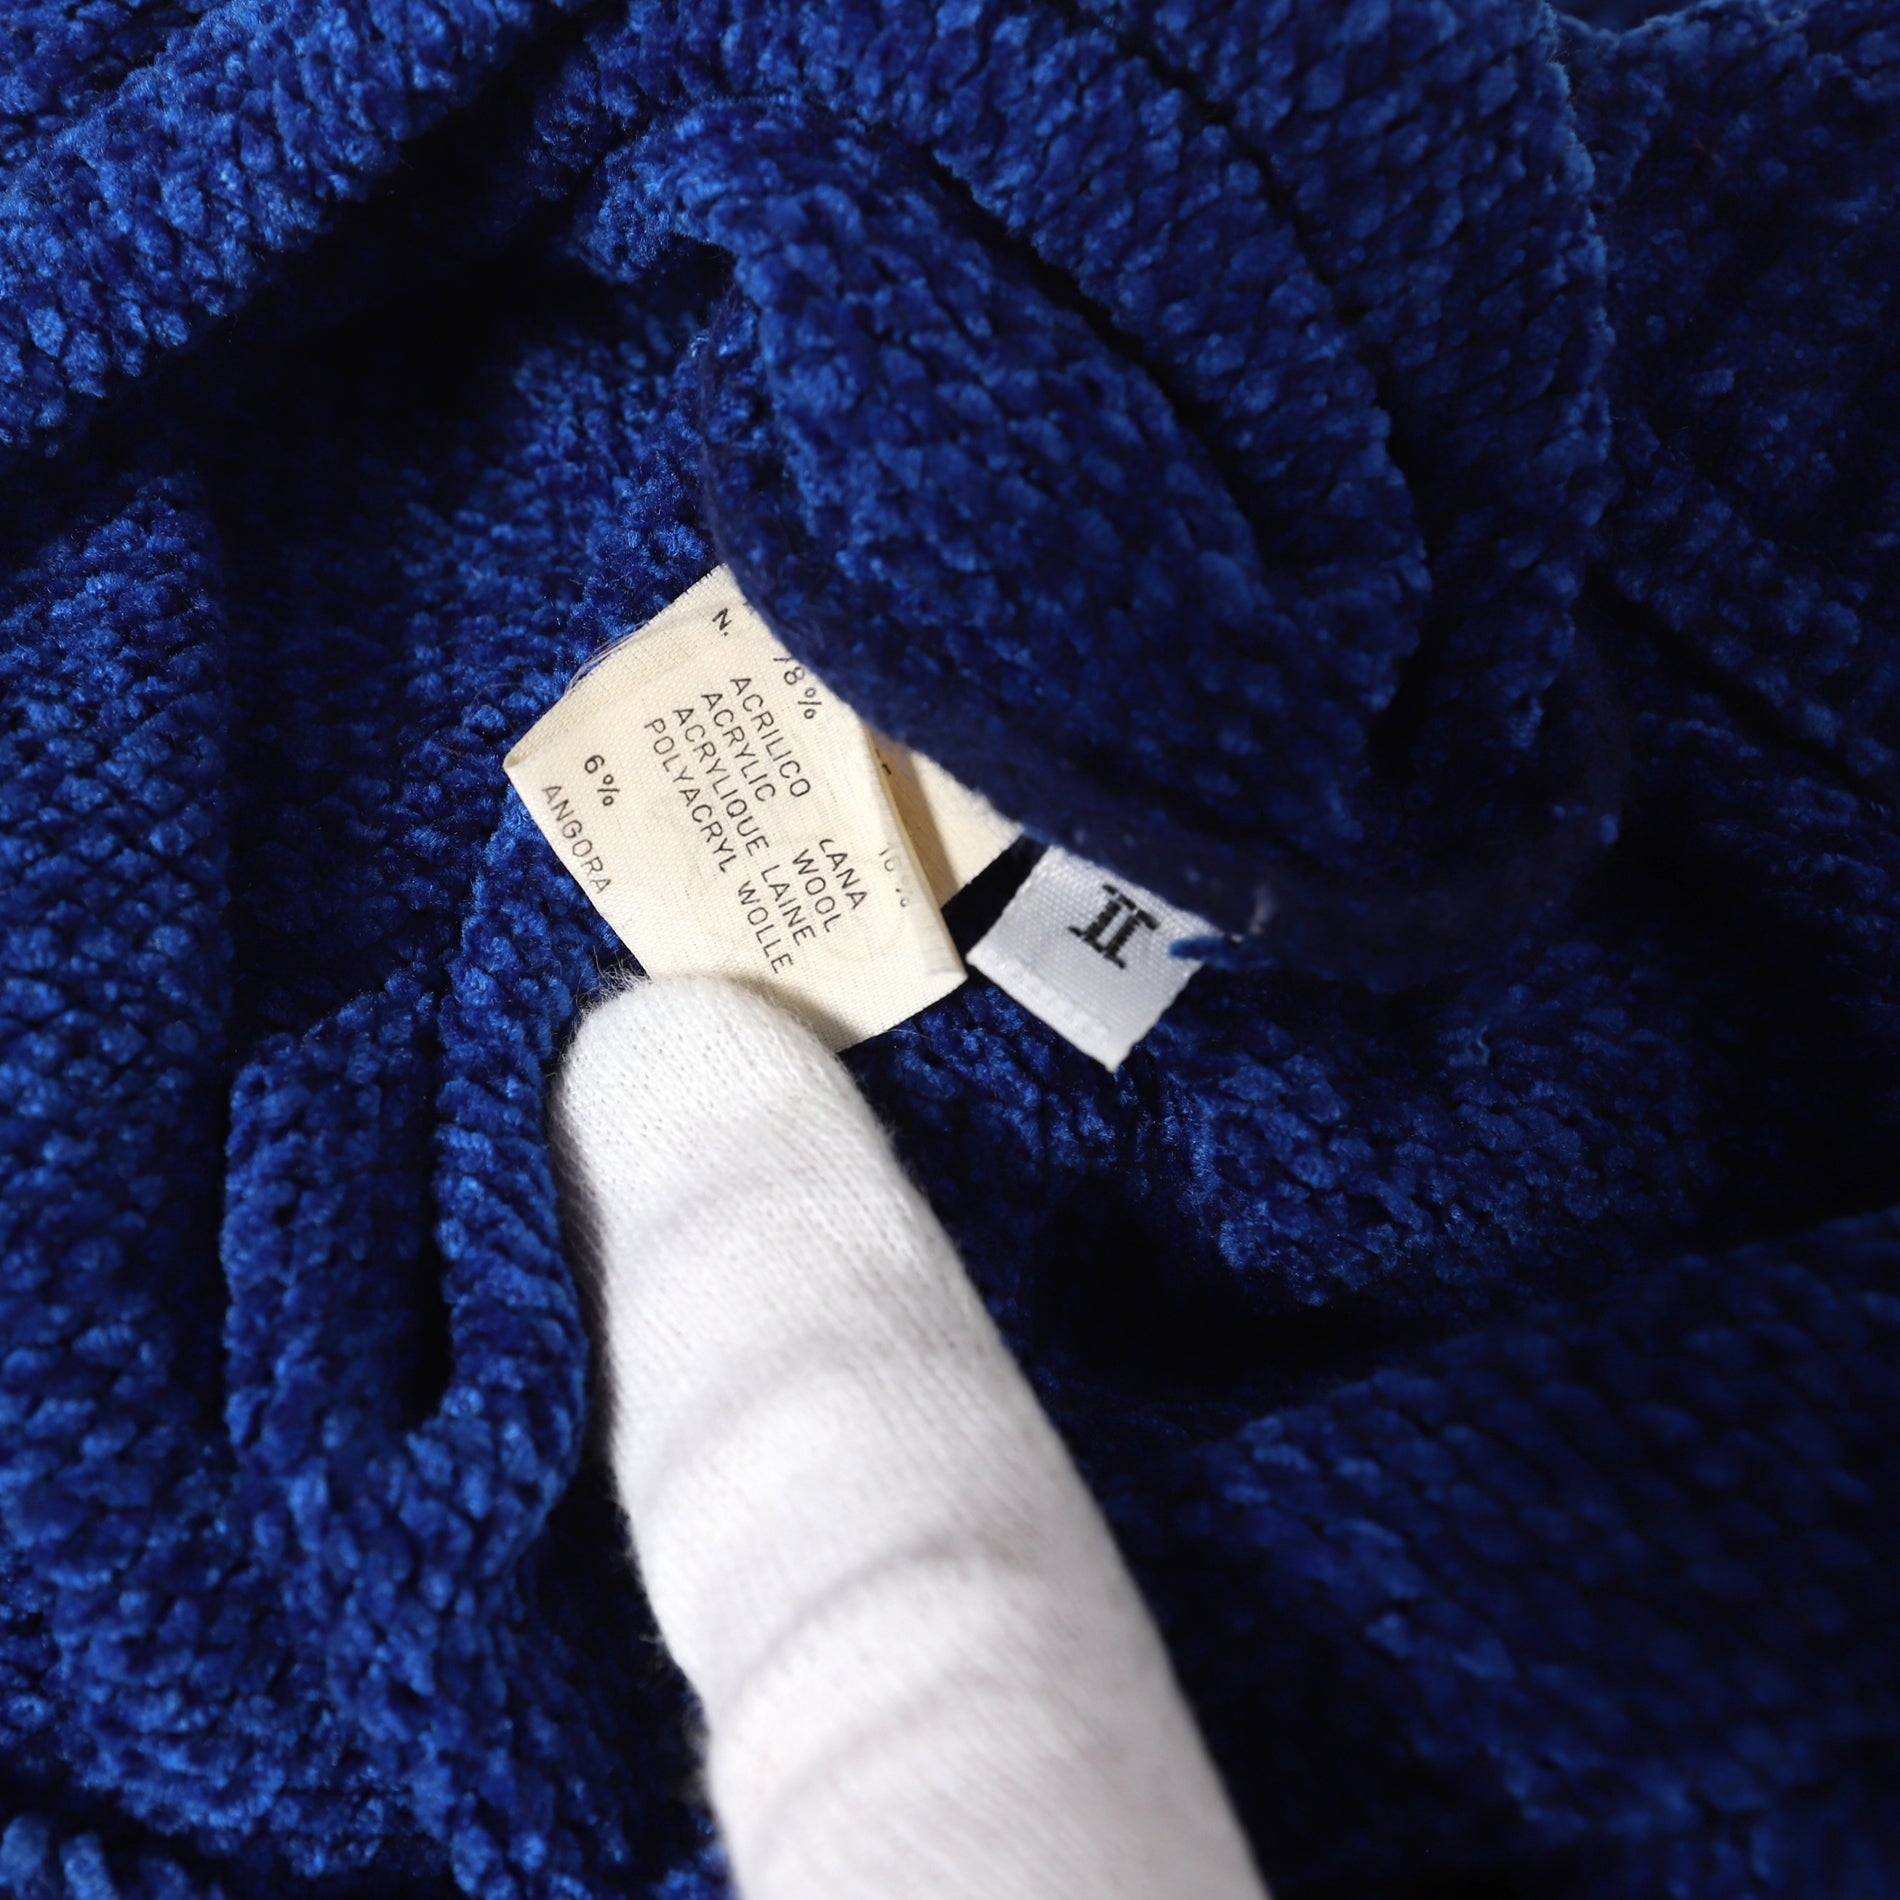 Gianni Versace 80s Geometric Knit Sweater